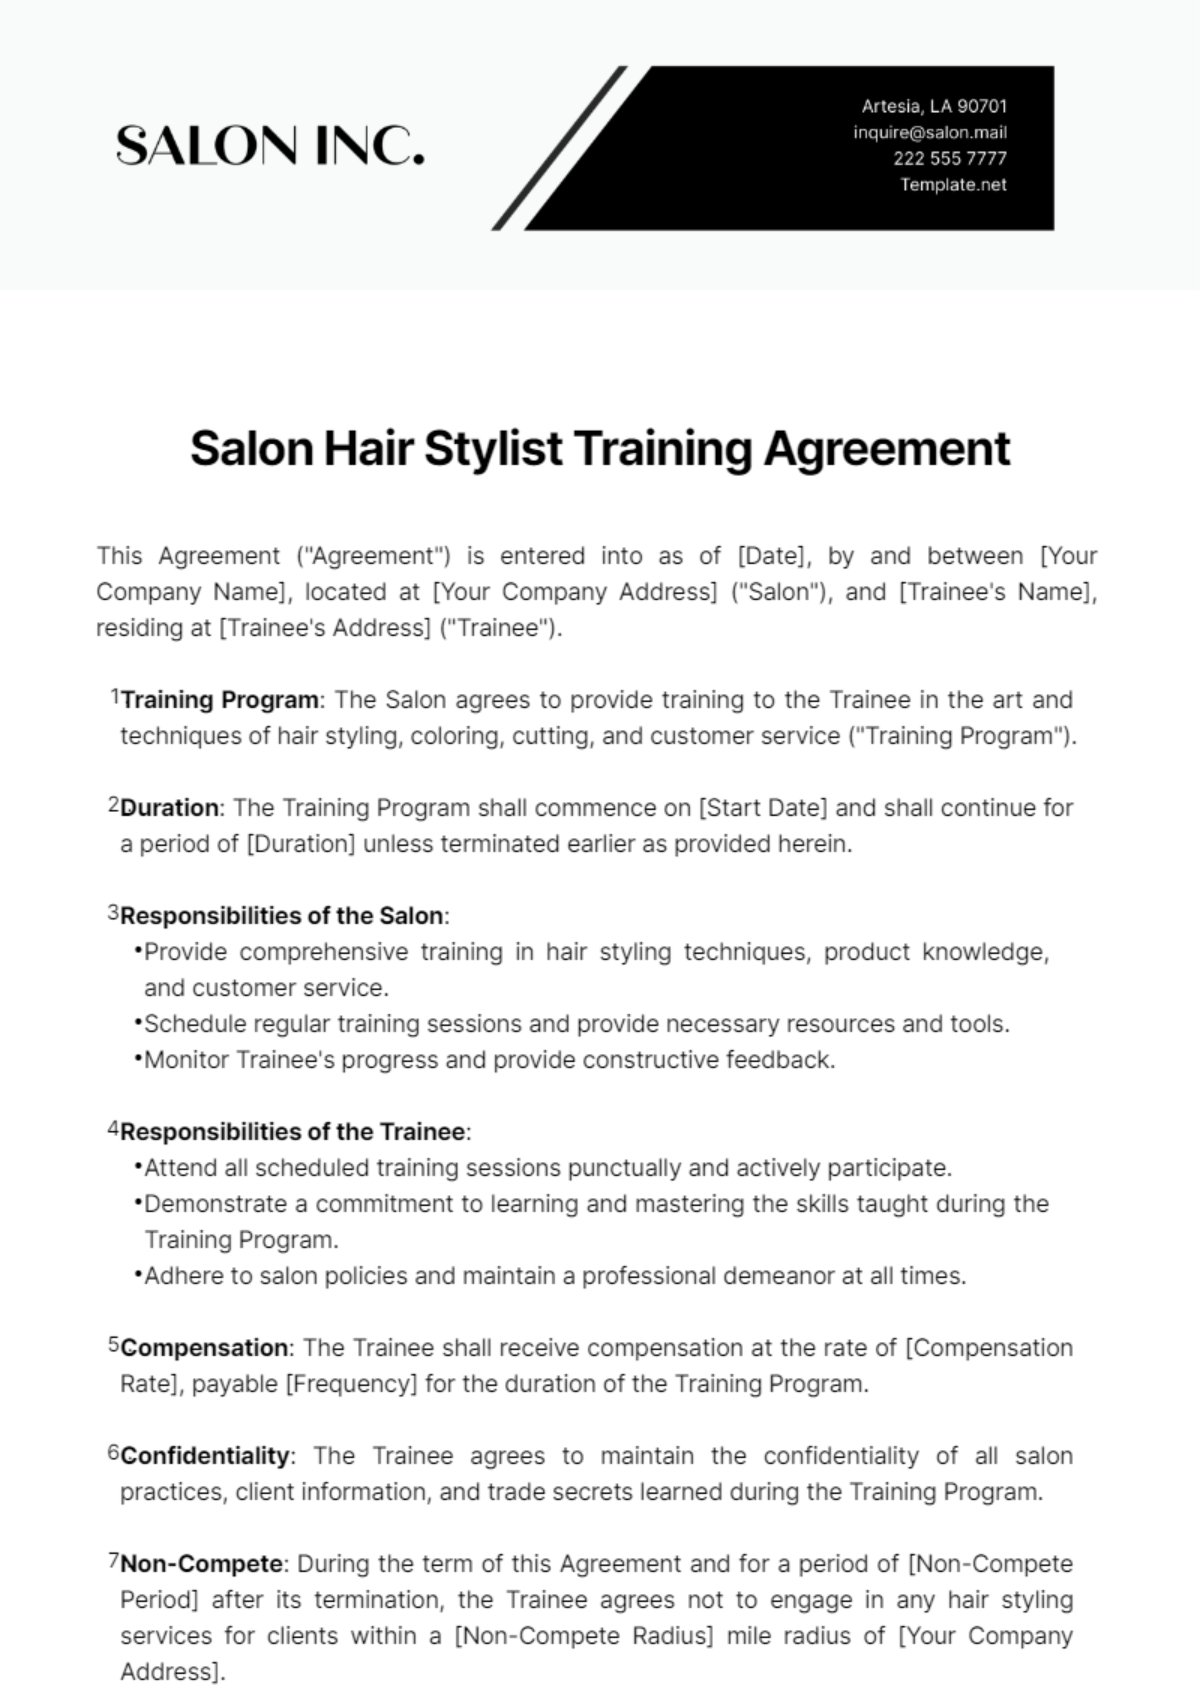 Salon Hair Stylist Training Agreement Template